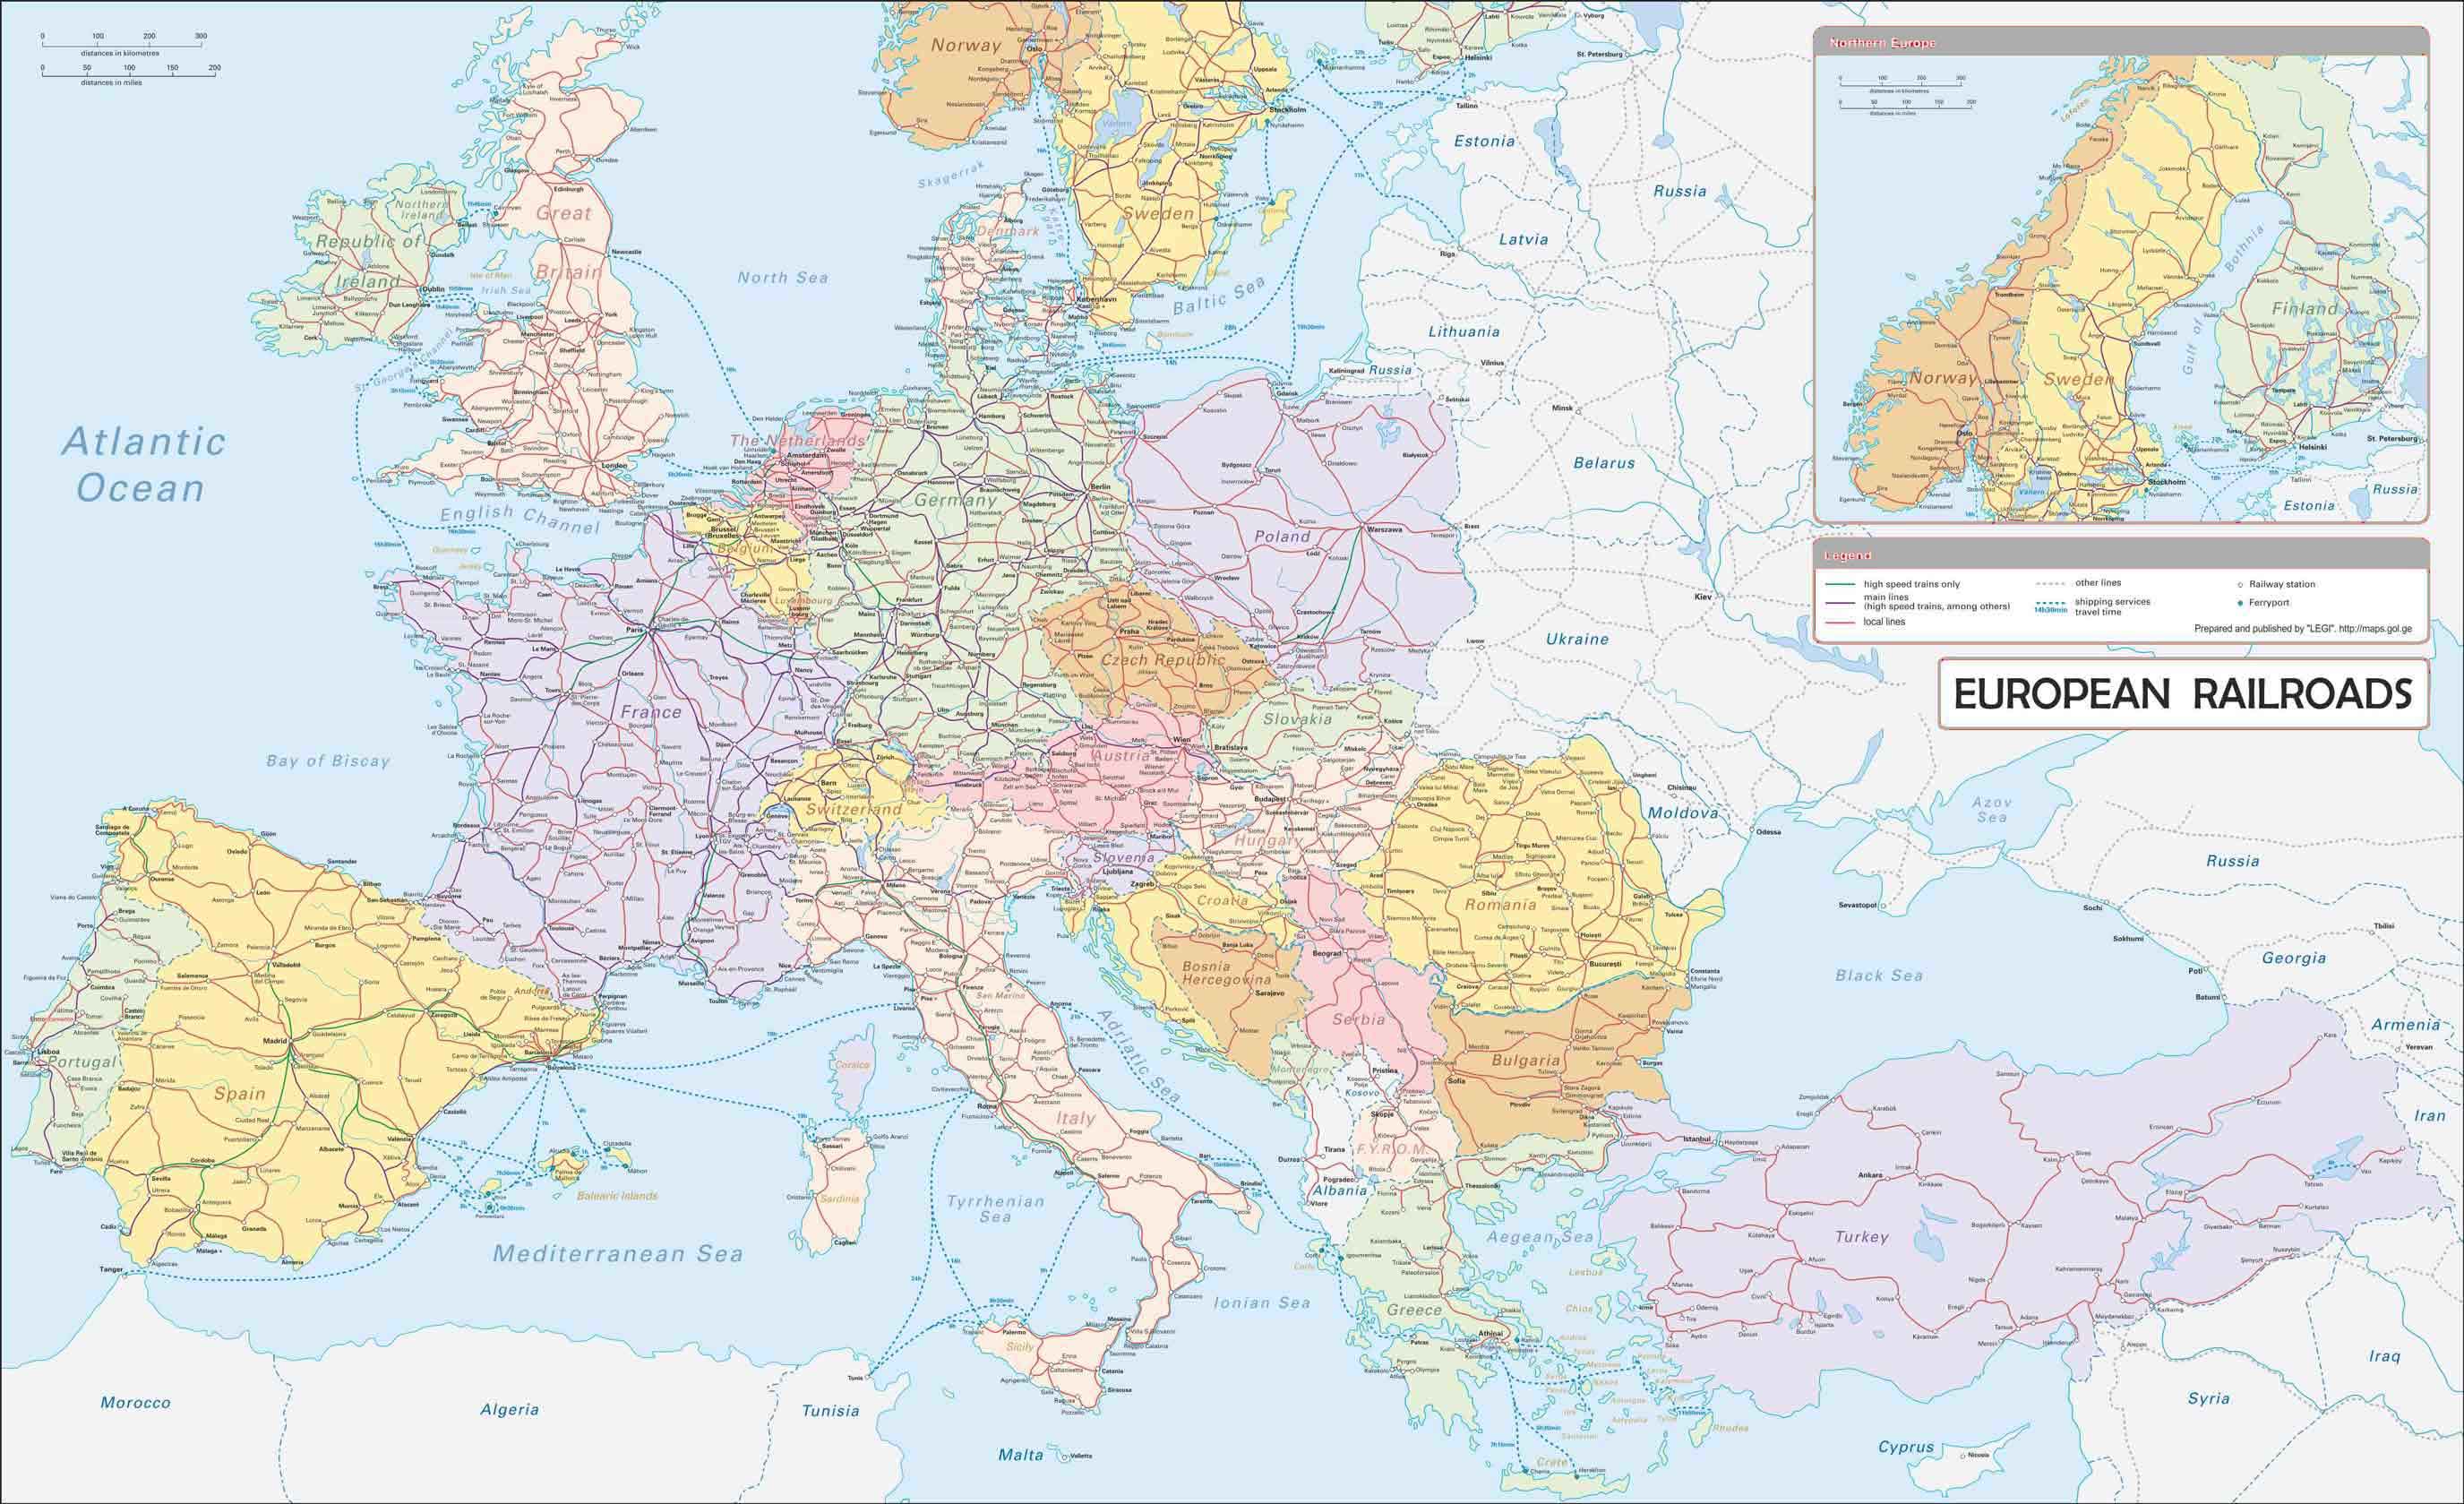 EUROPE RAILWAY MAP